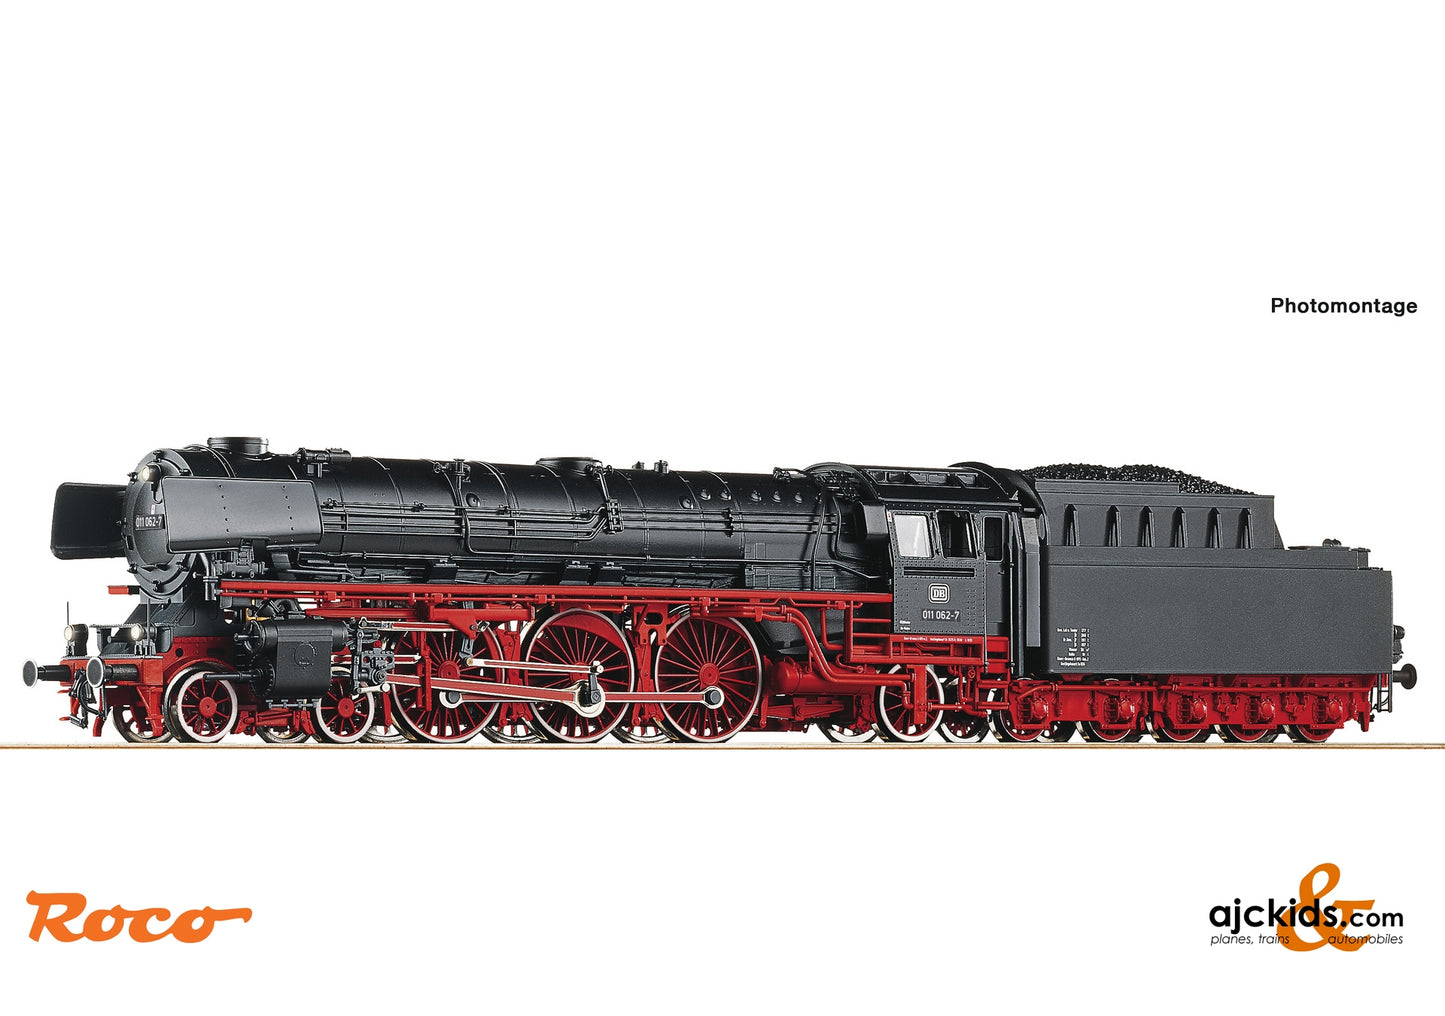 Roco 70051 - Steam locomotive 011 062-7 DB at Ajckids.com